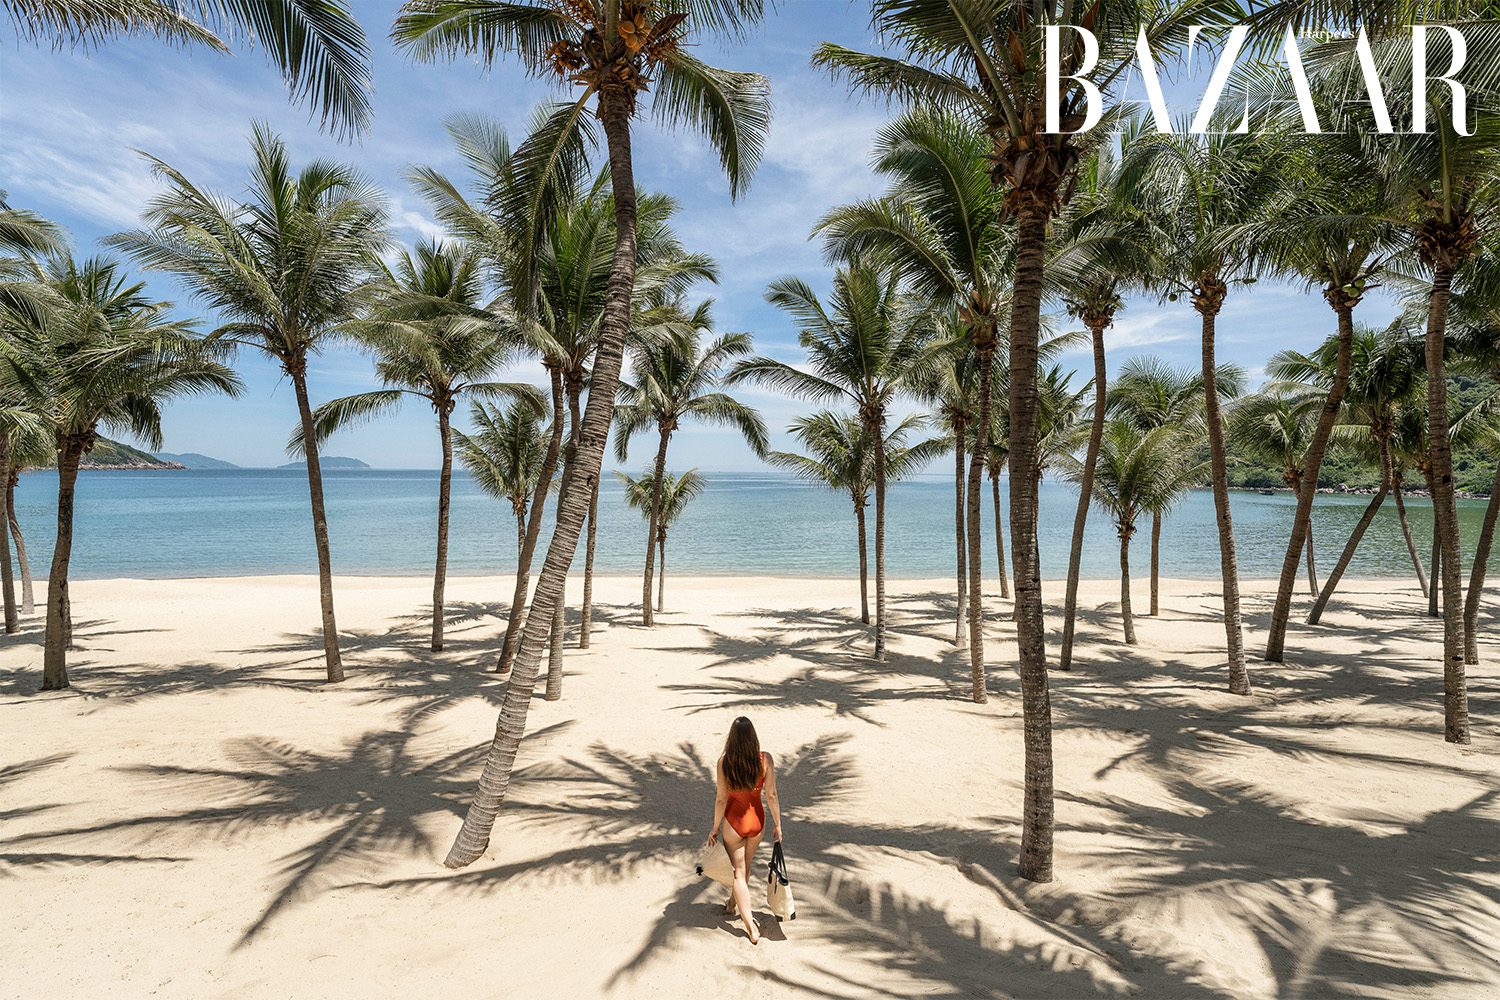 Harper's Bazaar_Khu nghỉ dưỡng InterContinental Danang Sun Peninsula_03